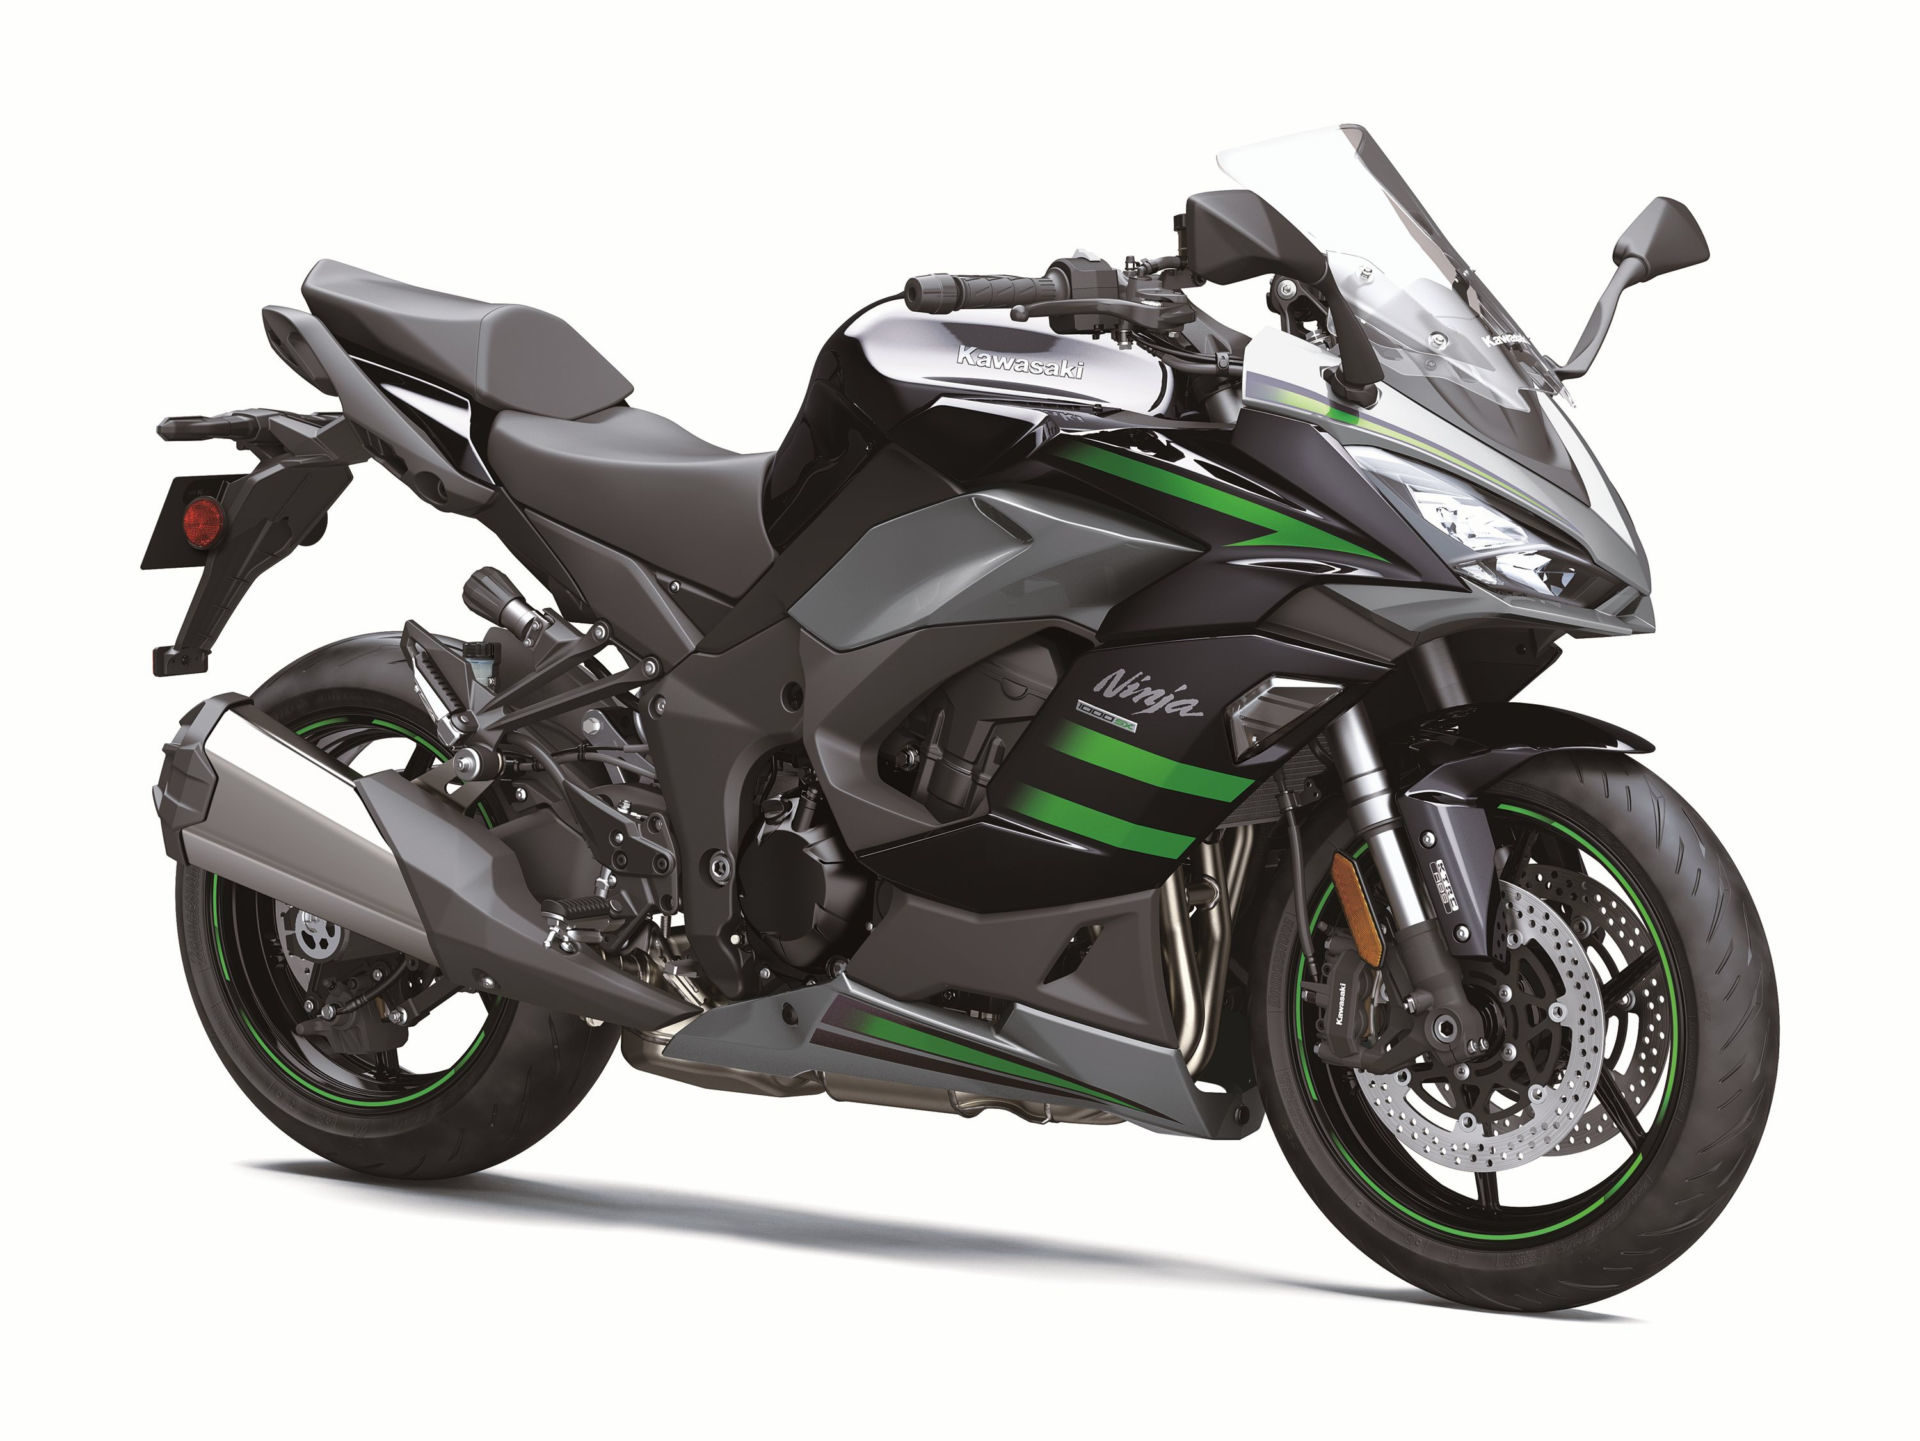 2020 Kawasaki Enhances Ninja 1000sx With New Technology Roadracing World Magazine Motorcycle Riding Racing Tech News